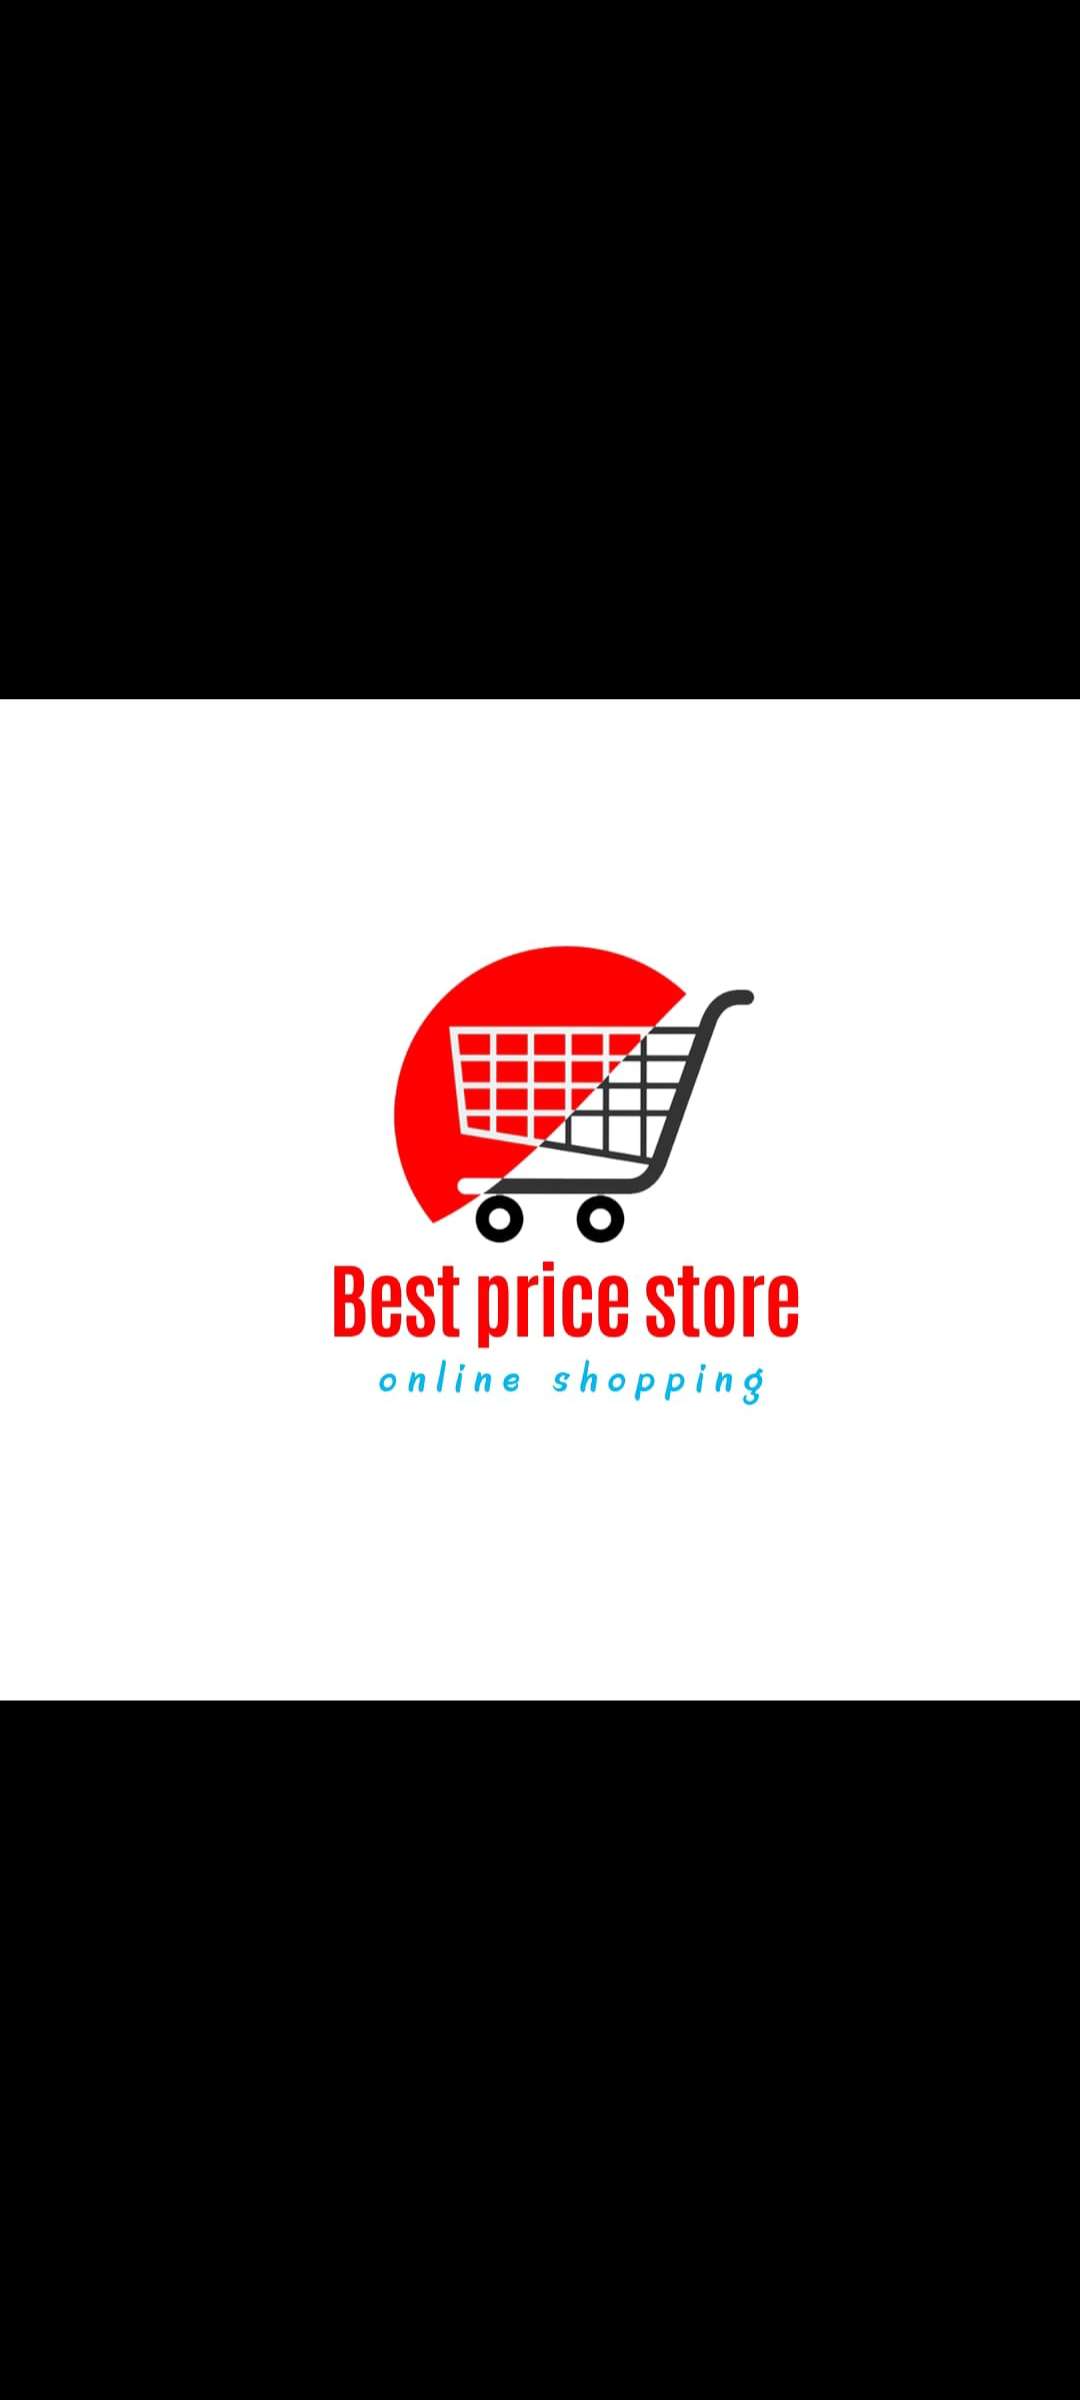 Best price store